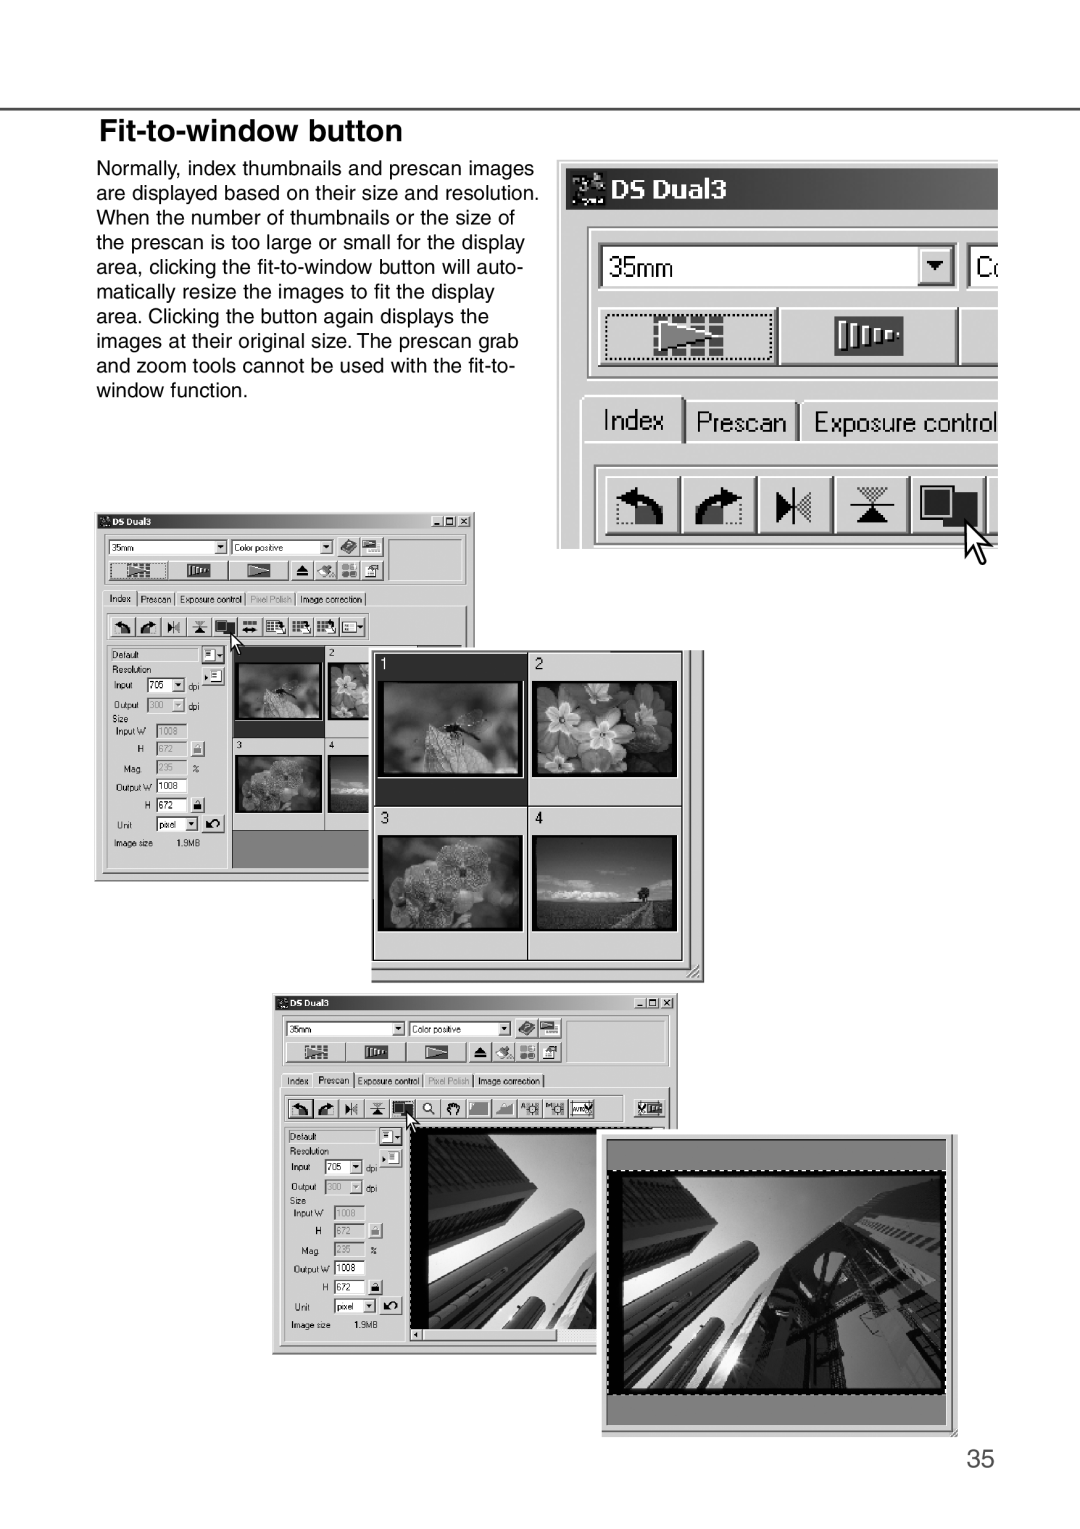 Konica Minolta AF-2840 instruction manual Fit-to-windowbutton 